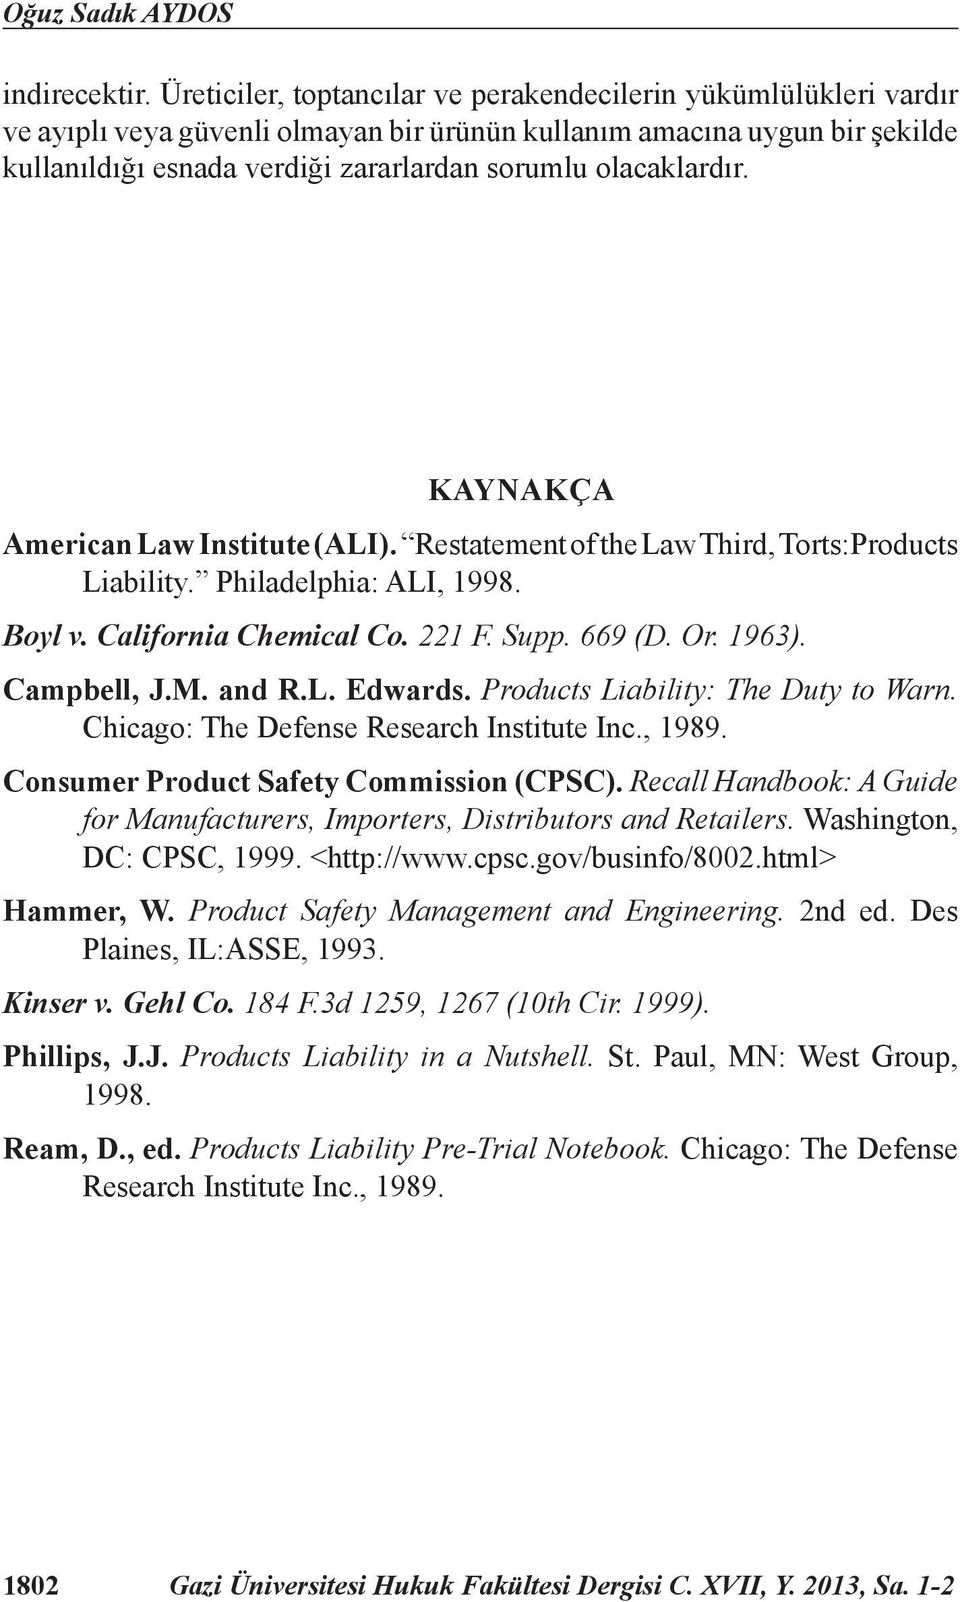 olacaklardır. KAYNAKÇA American Law Institute (ALI). Restatement of the Law Third, Torts:Products Liability. Philadelphia: ALI, 1998. Boyl v. California Chemical Co. 221 F. Supp. 669 (D. Or. 1963).